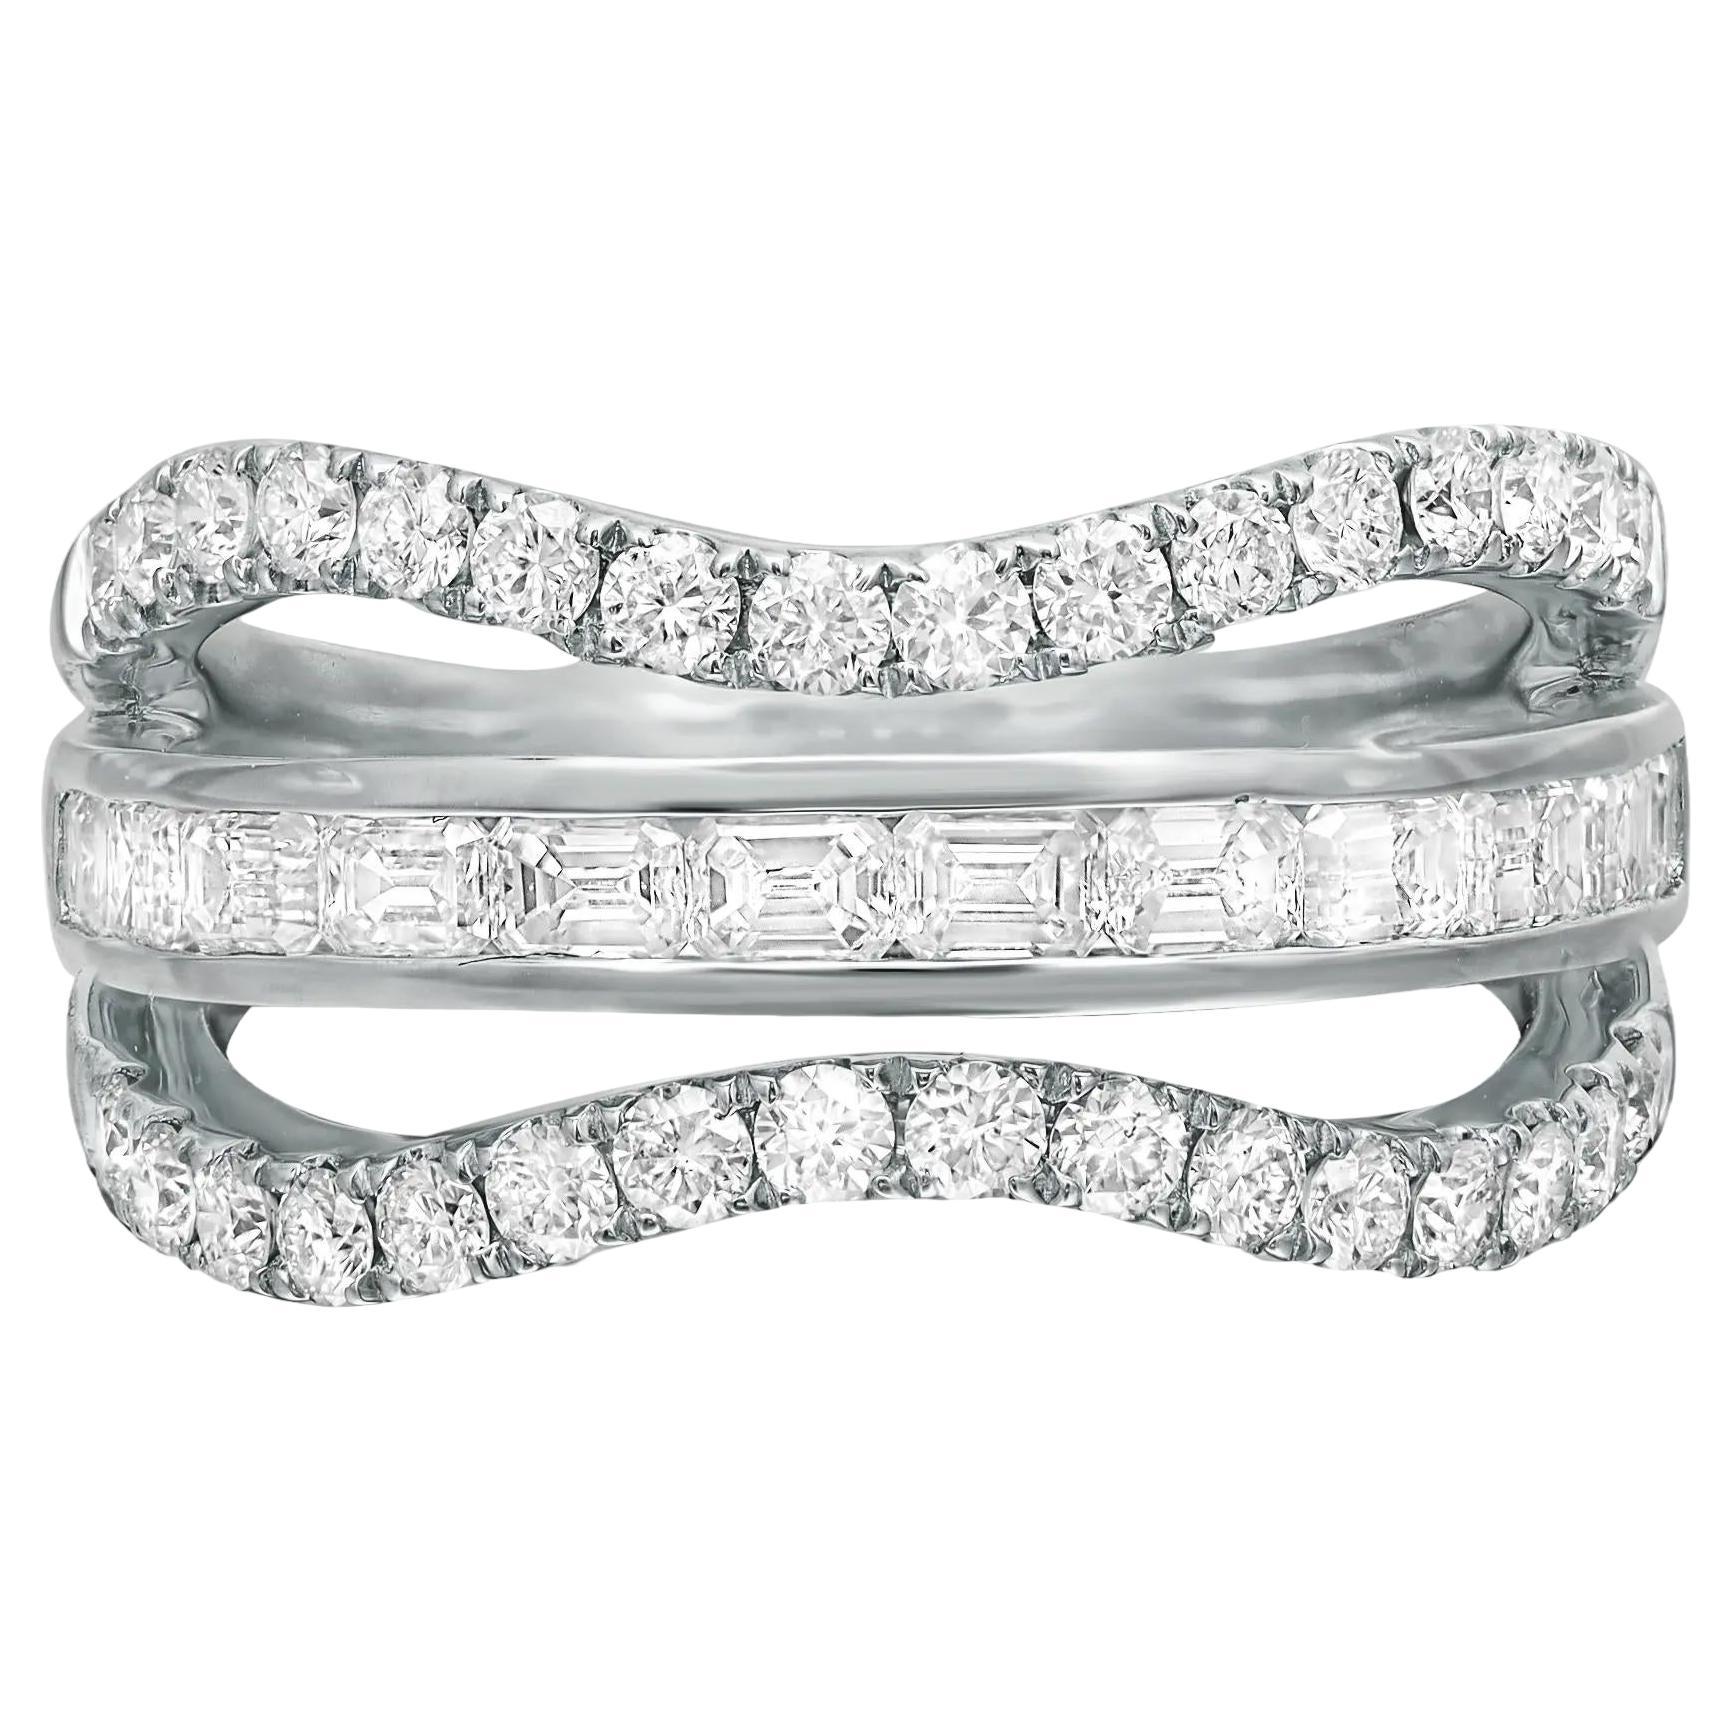 Emerald Cut & Round Cut Diamond Band Ring 18K White Gold 1.63Cttw Size 6.5